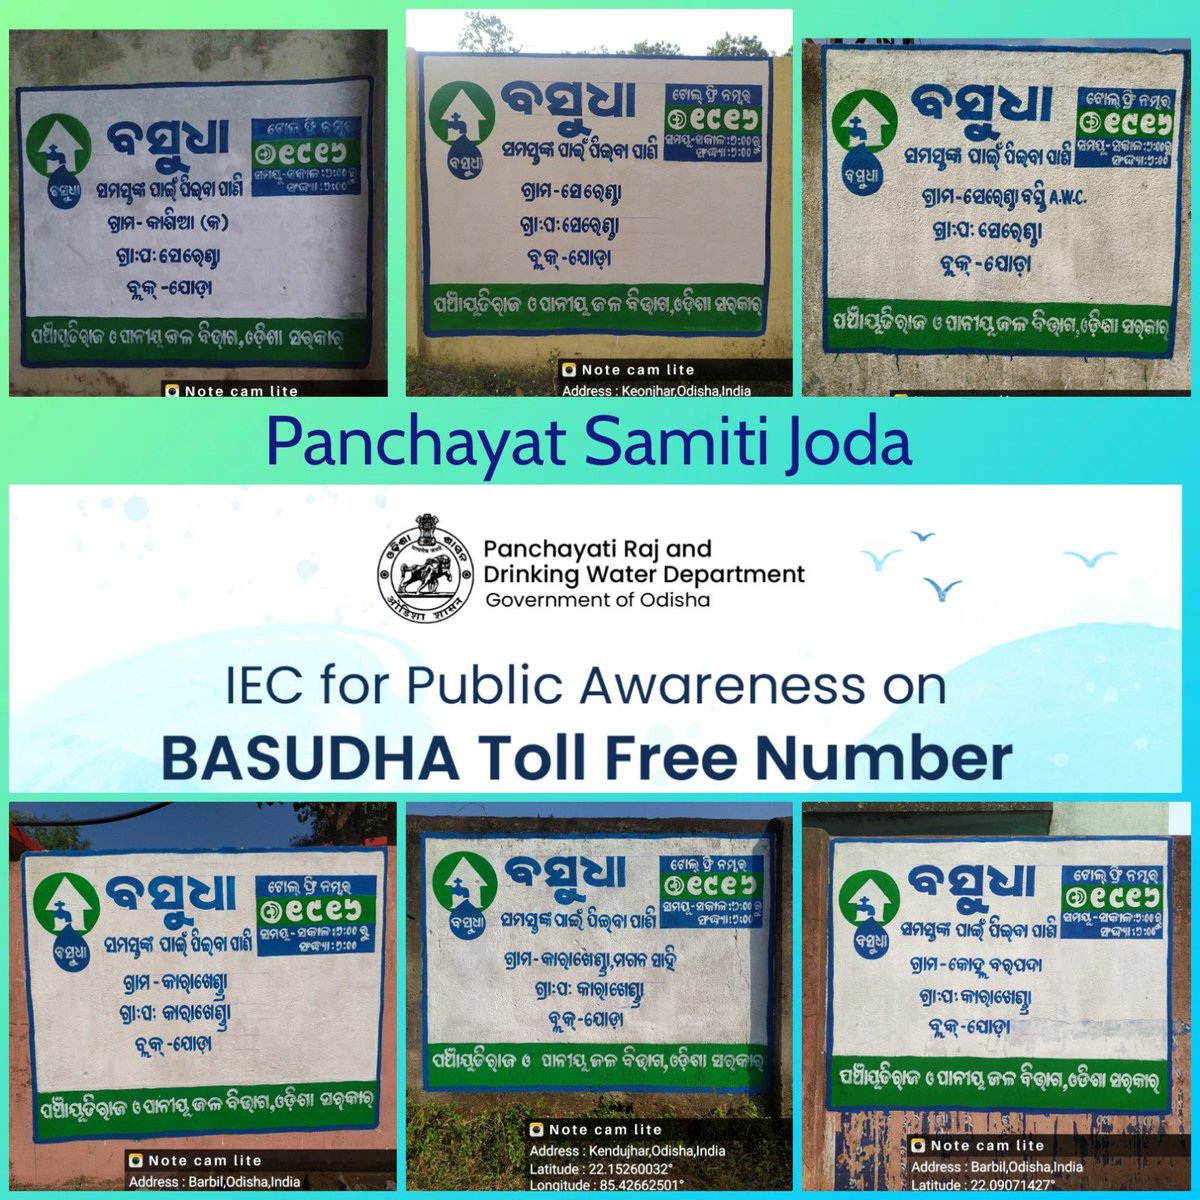 IEC activities for Public awareness on Basudha Toll free number in Joda Block, Keonjhar #1916 #safeandcleanwaterforall #Basudha @CMO_Odisha @drdakjr @PRDeptOdisha